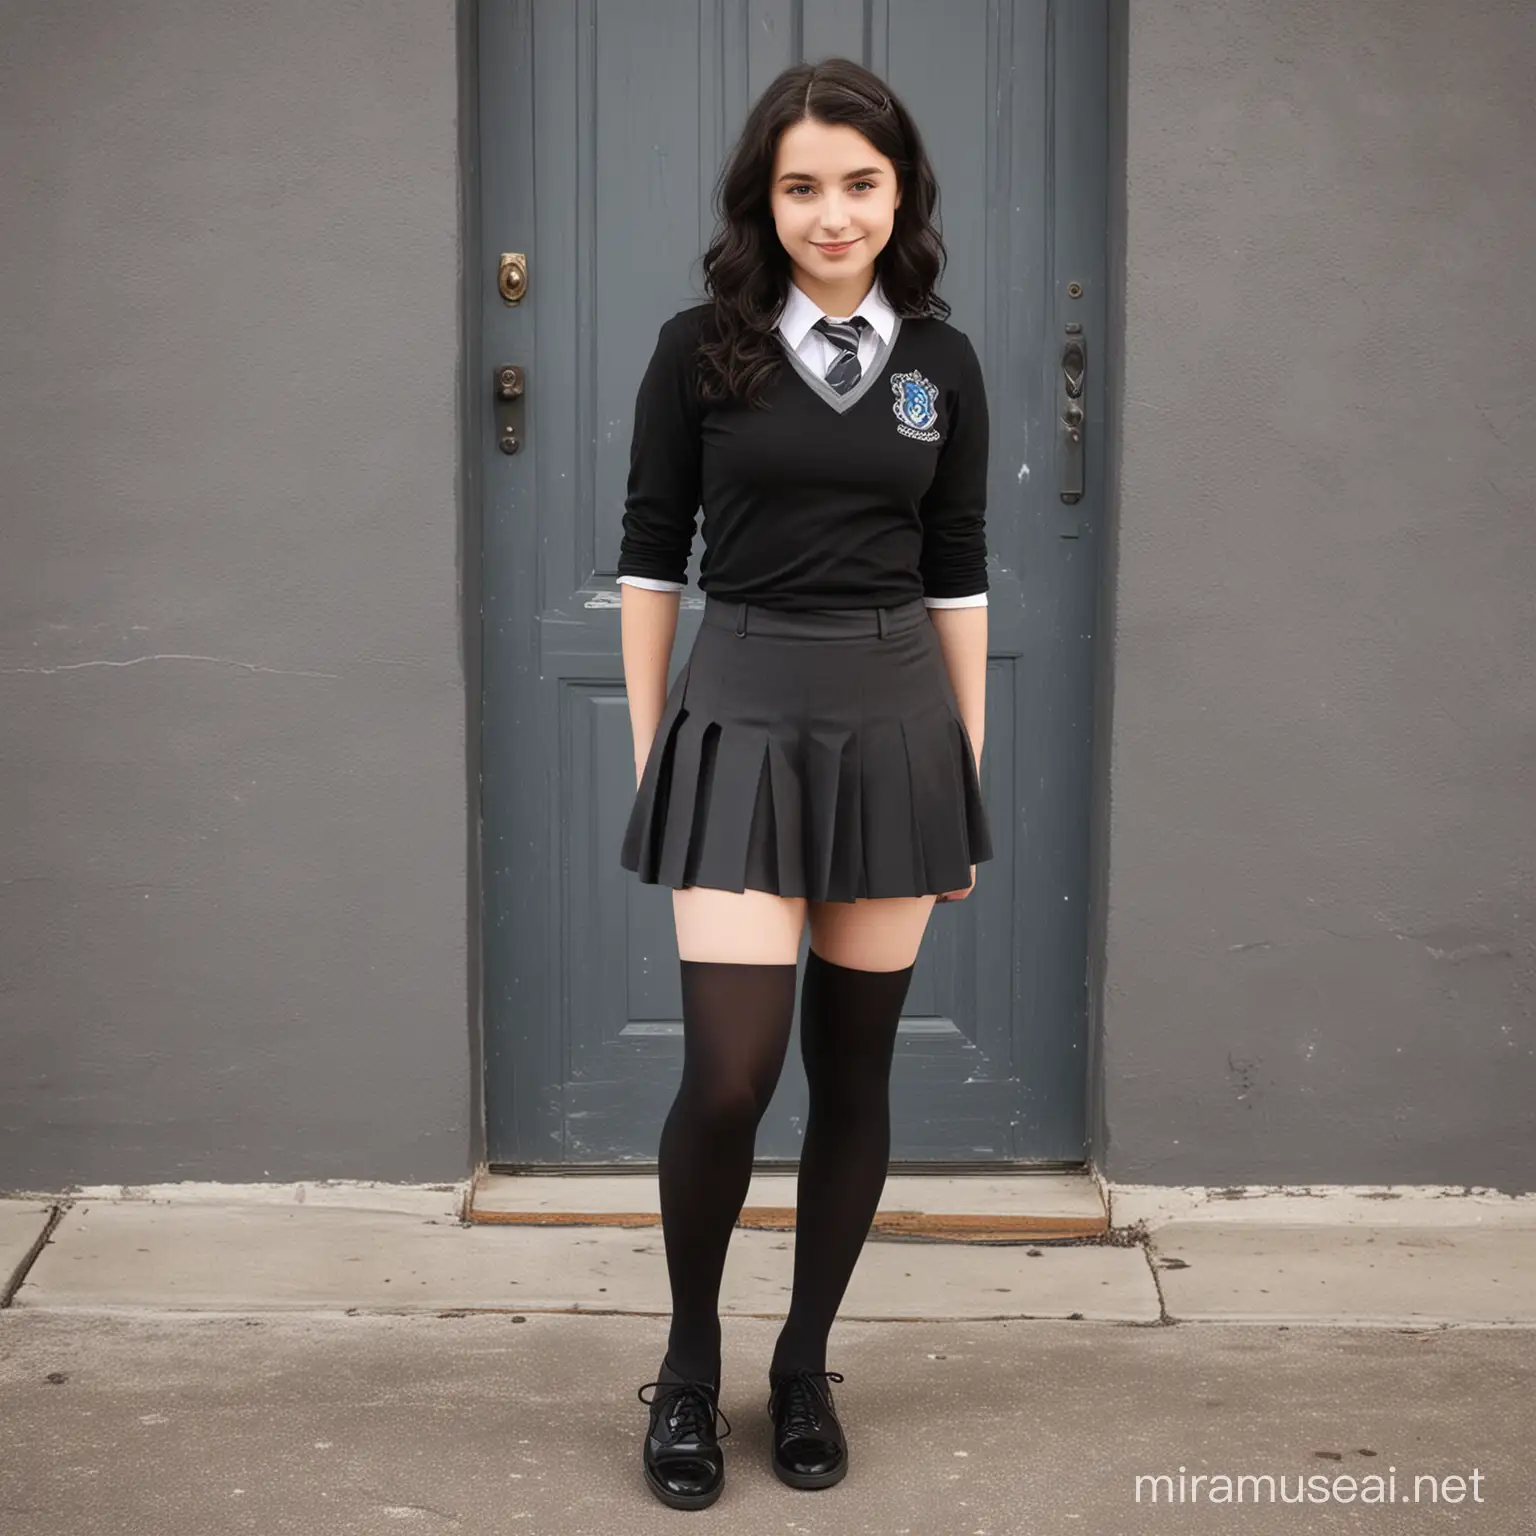 14 year old white girl with wavy mid length black hair, wearing hogwarts uniform girl ravenclaw, short grey shirt, black tights pantyhose, black shoes